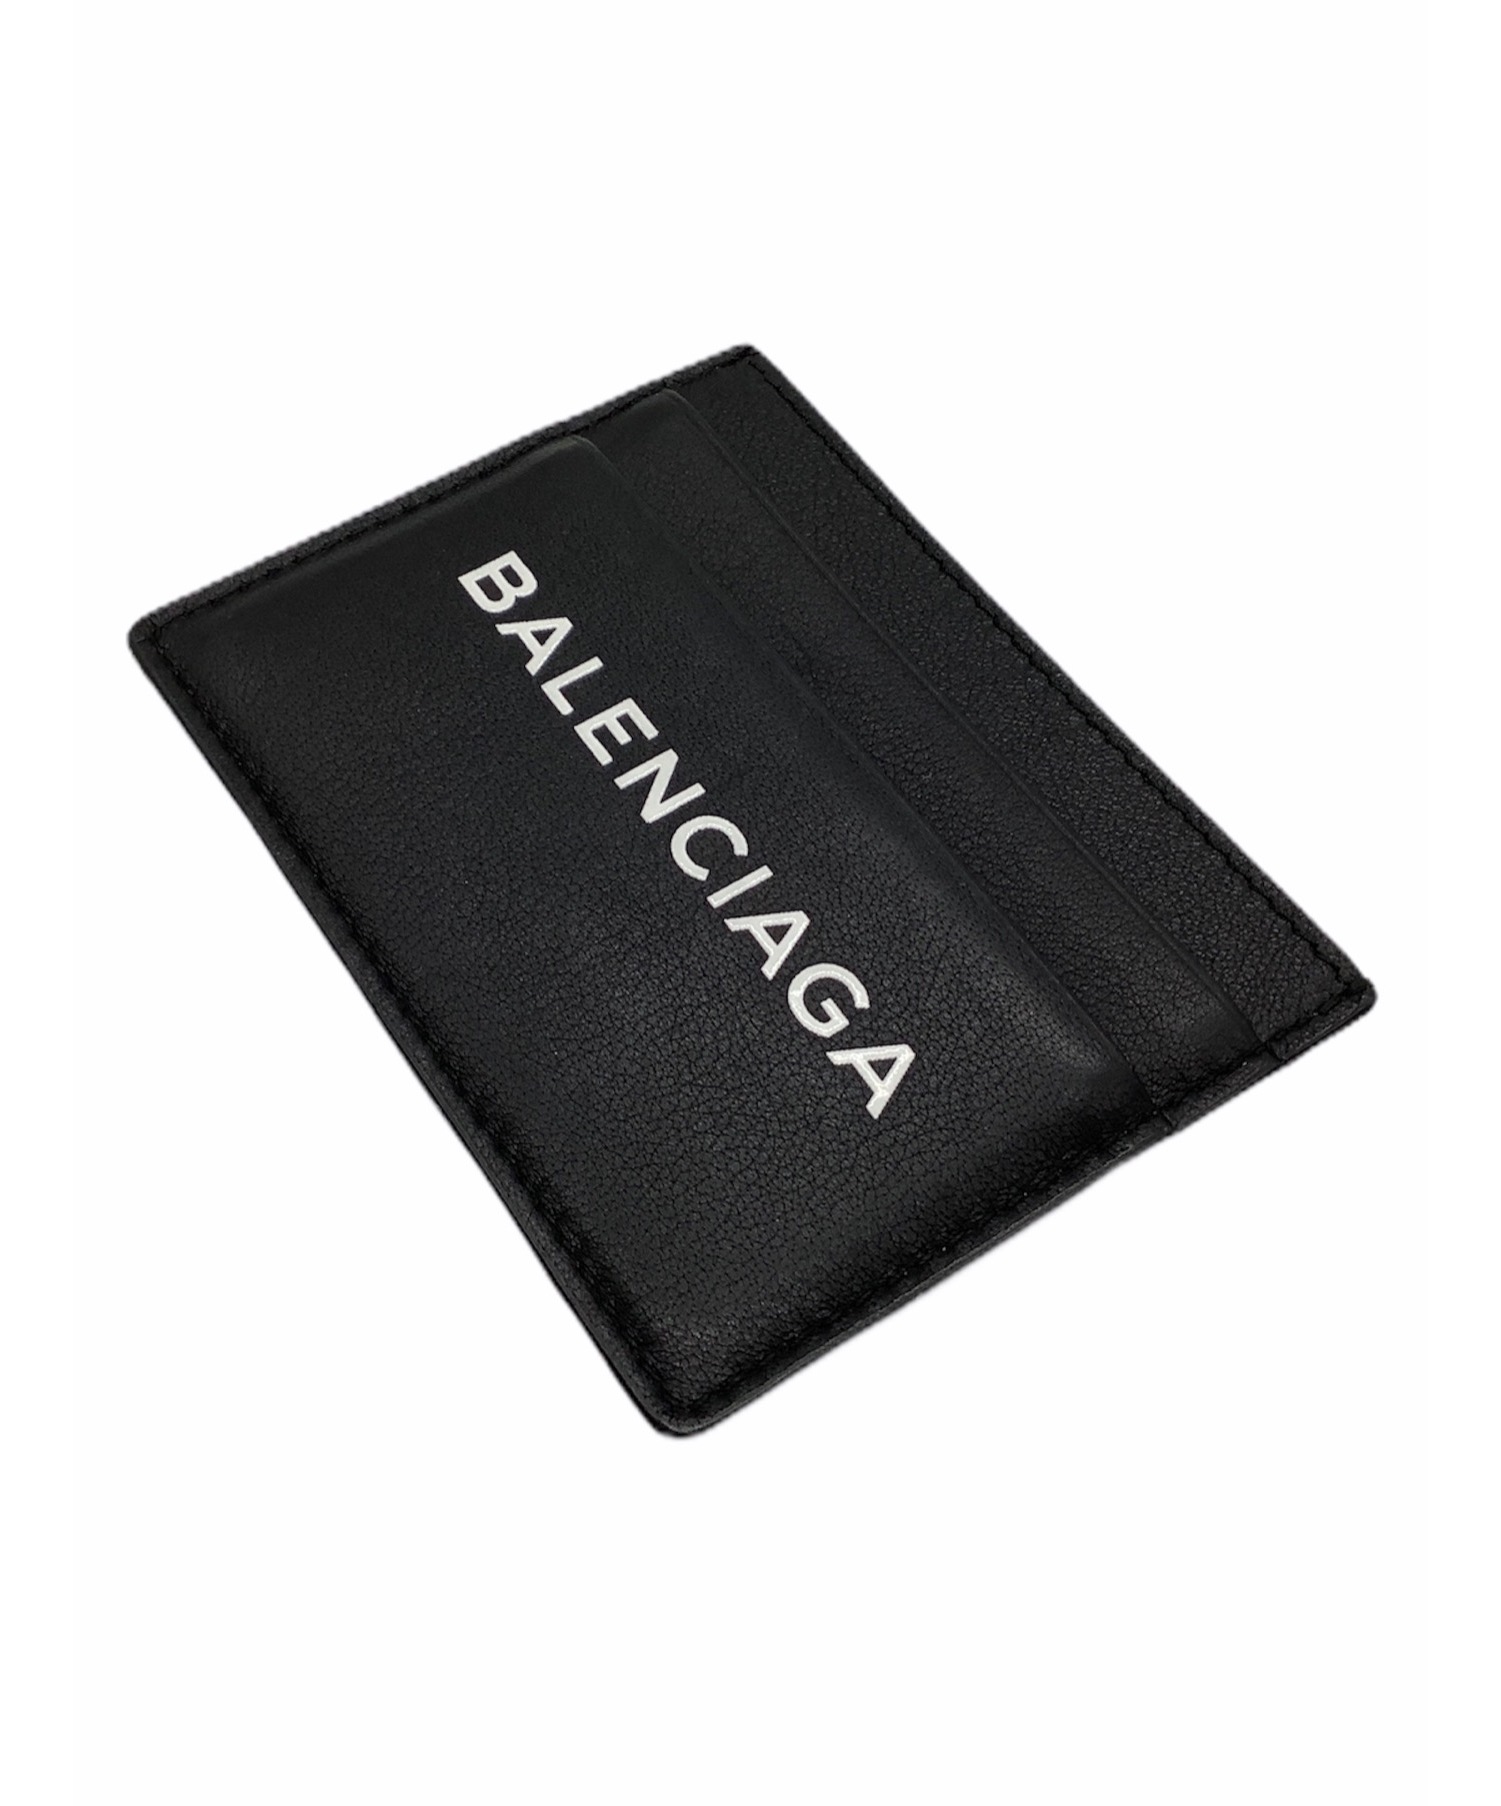 BALENCIAGA (バレンシアガ) カードケース ブラック 490620 490620 1000 Z 532244